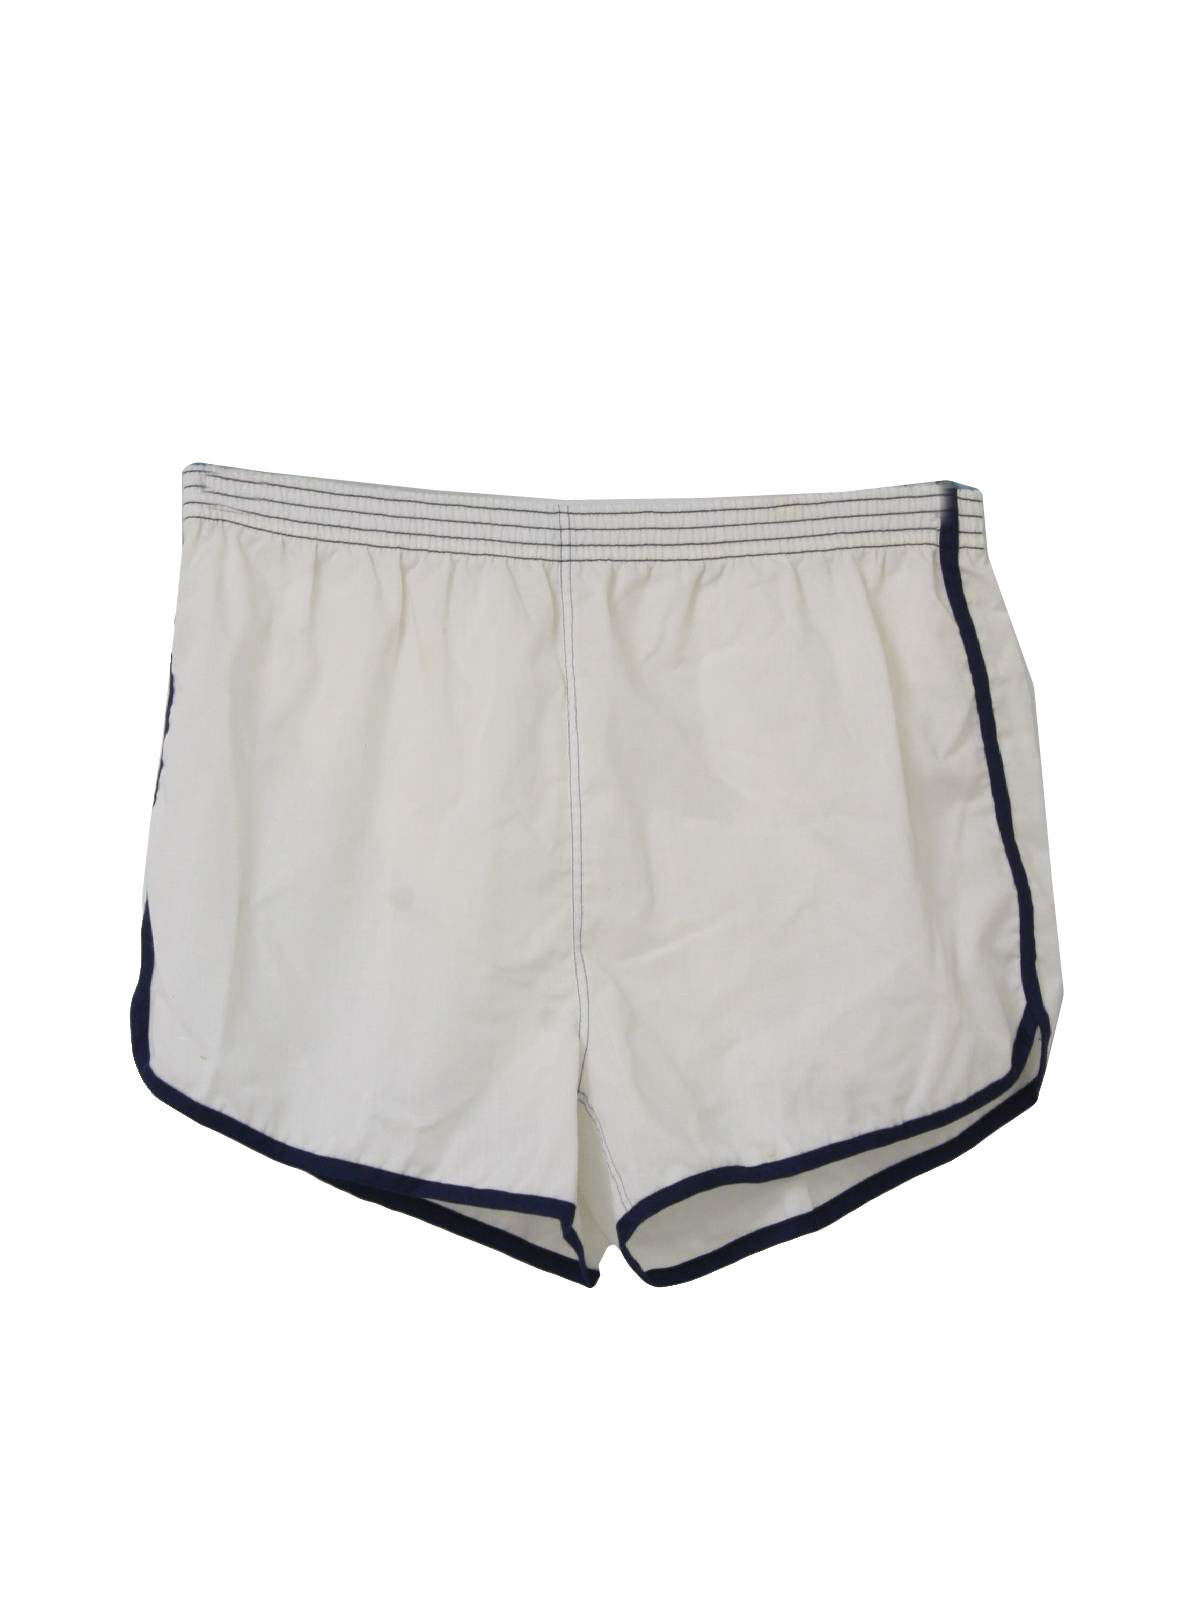 1980's Vintage Jockey Shorts: 80s -Jockey- Mens white background with ...